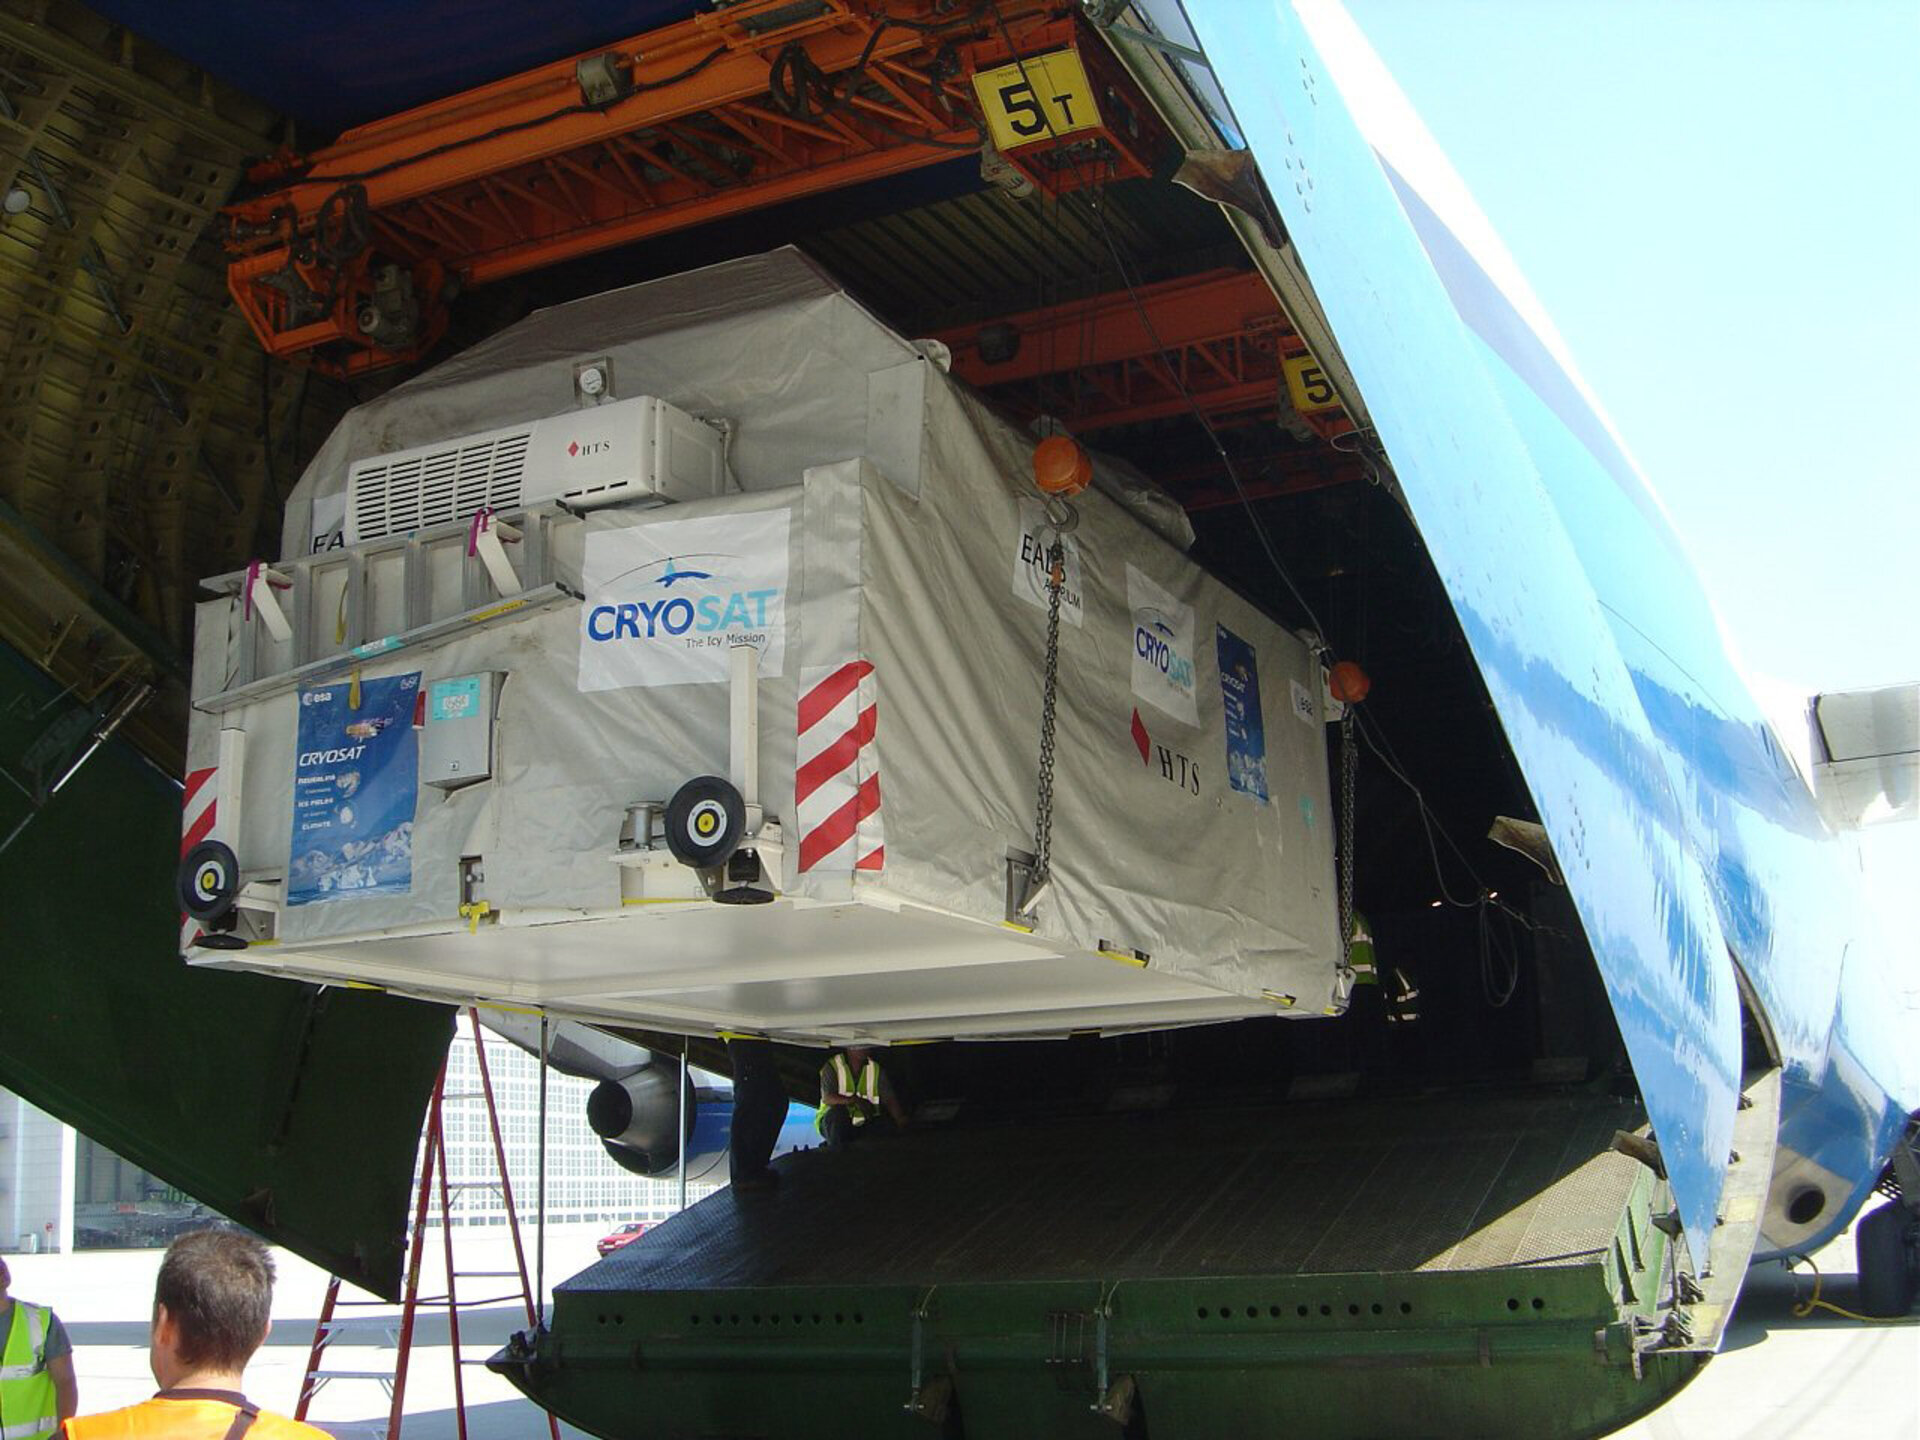 CryoSat being loaded into the Antonov cargo plane